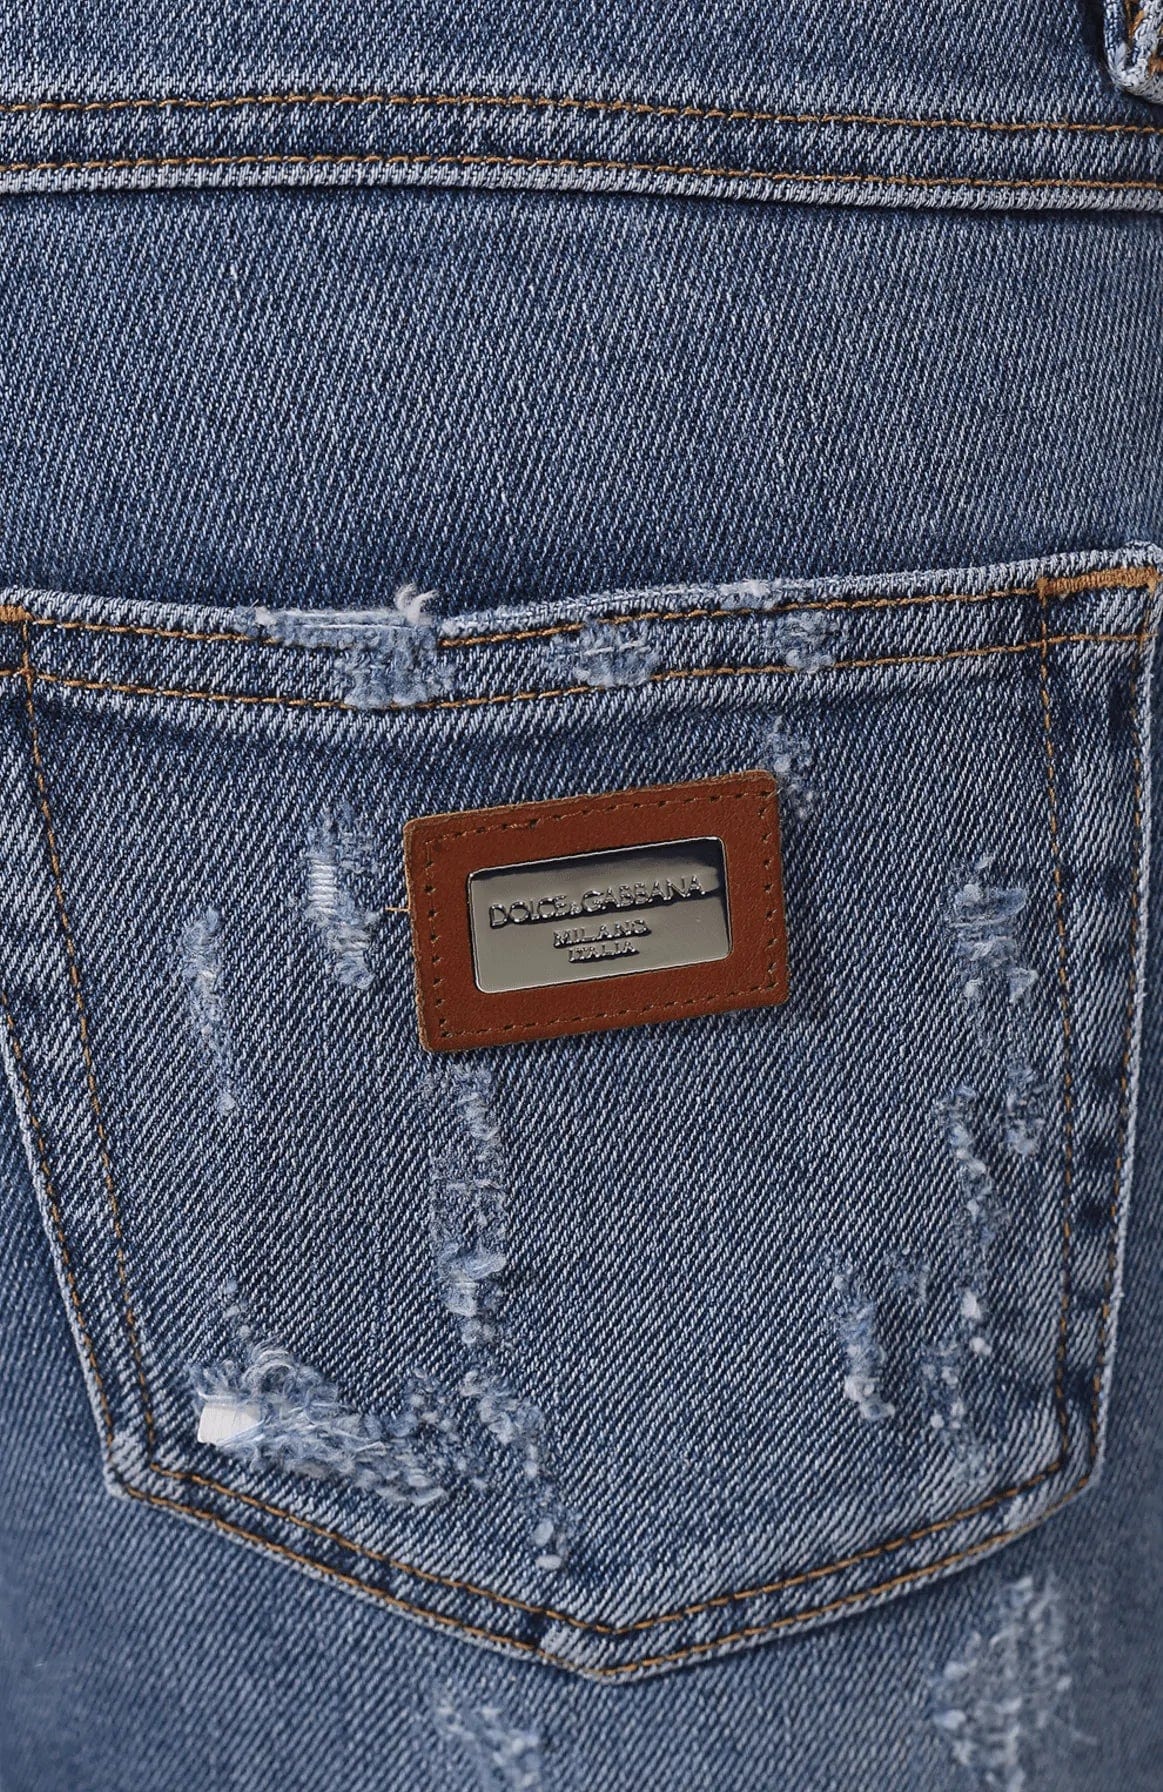 Dolce & Gabbana Flared Skinny Jeans